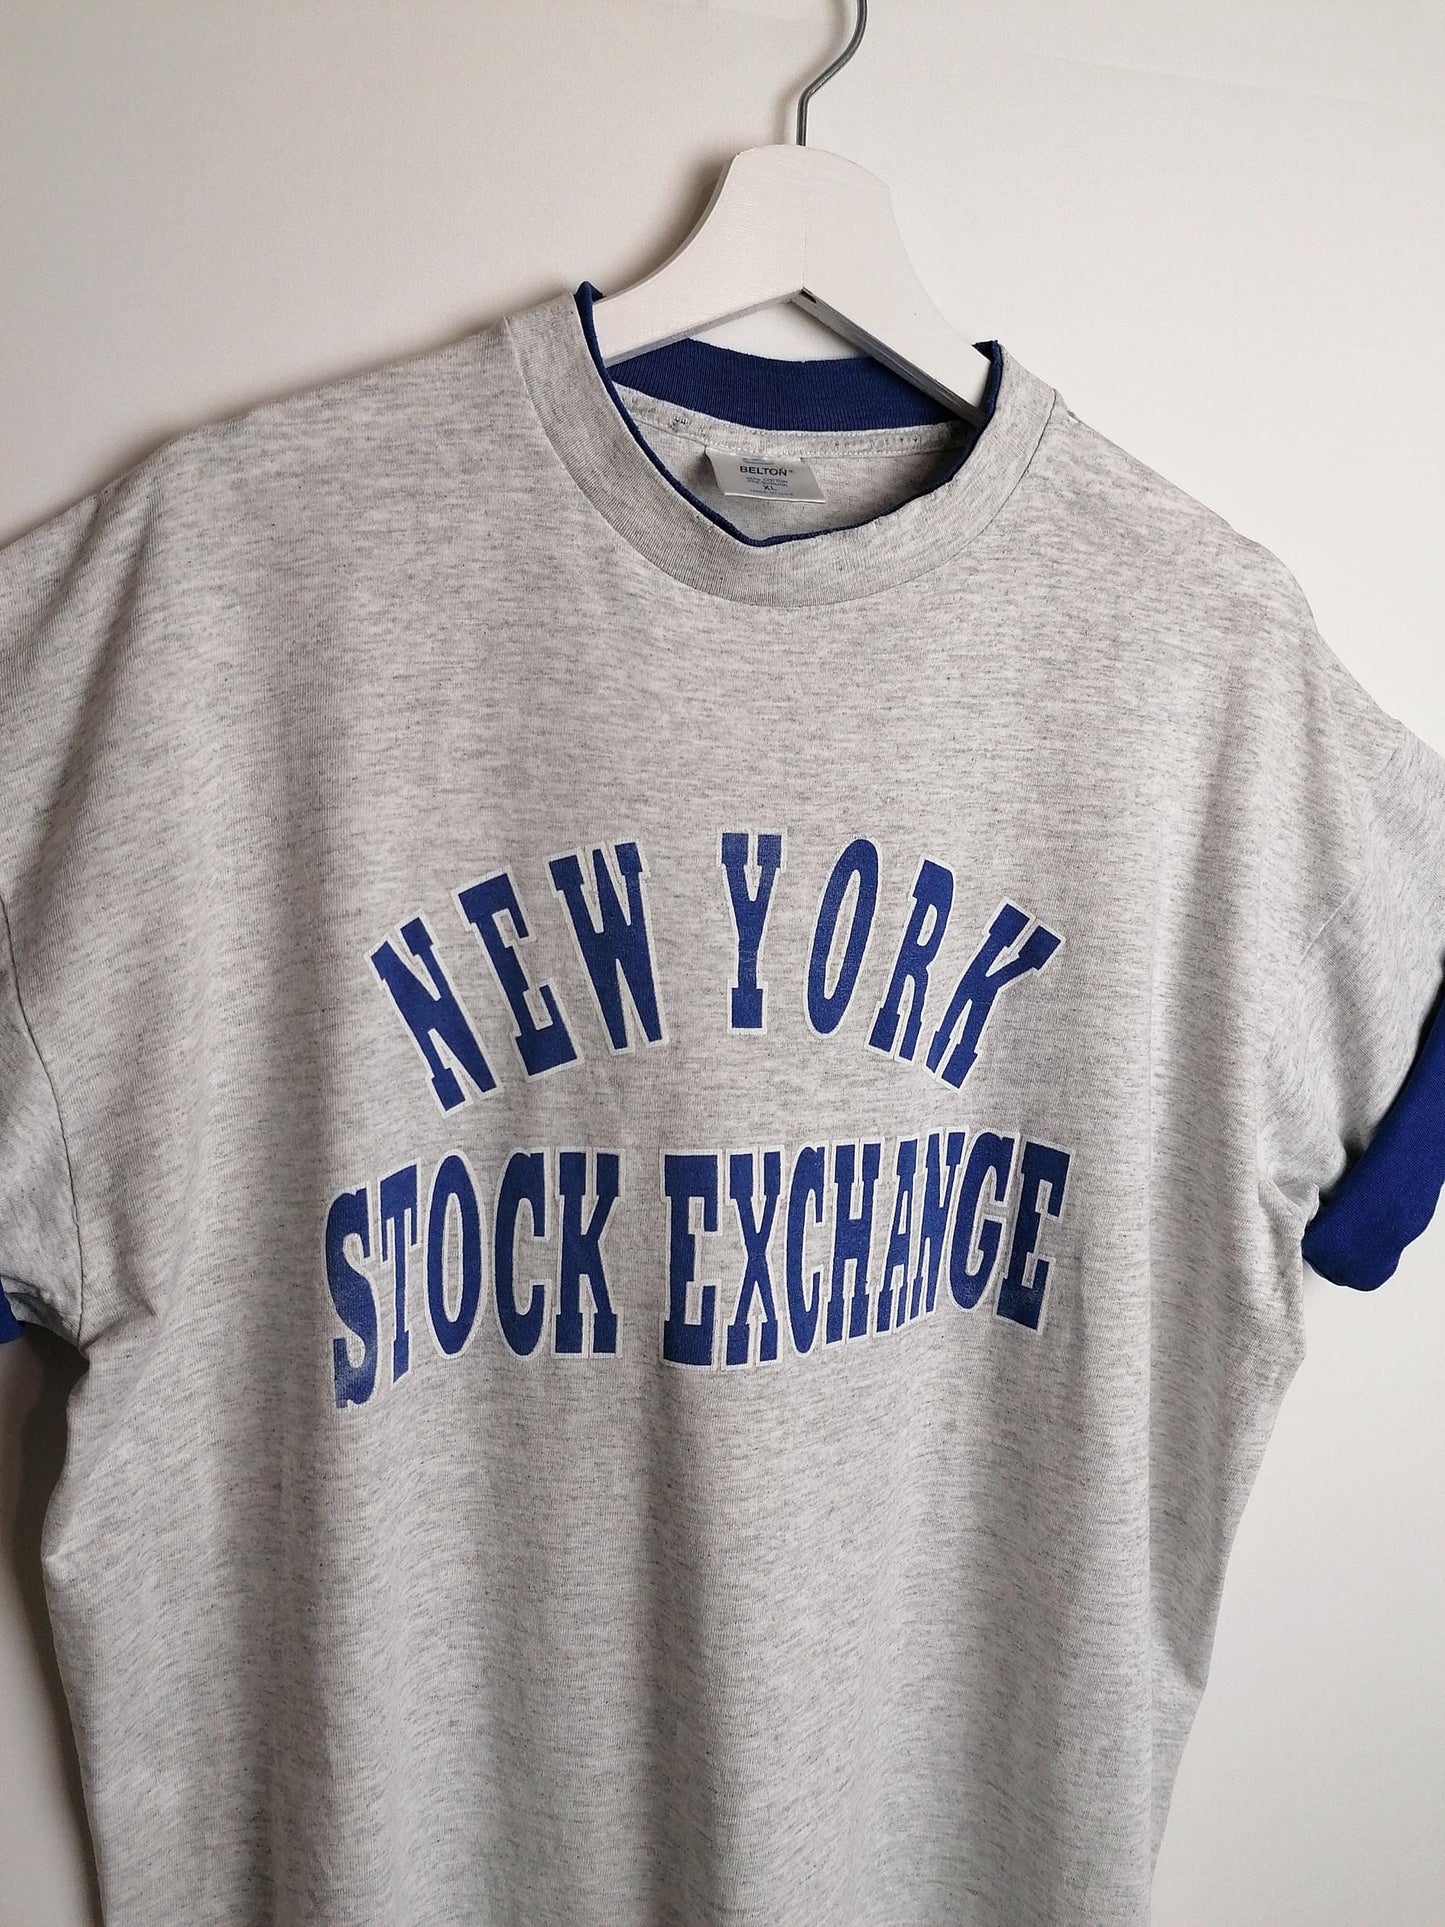 Vintage 90's New York Stock Exchange Muscle Tee - size XL